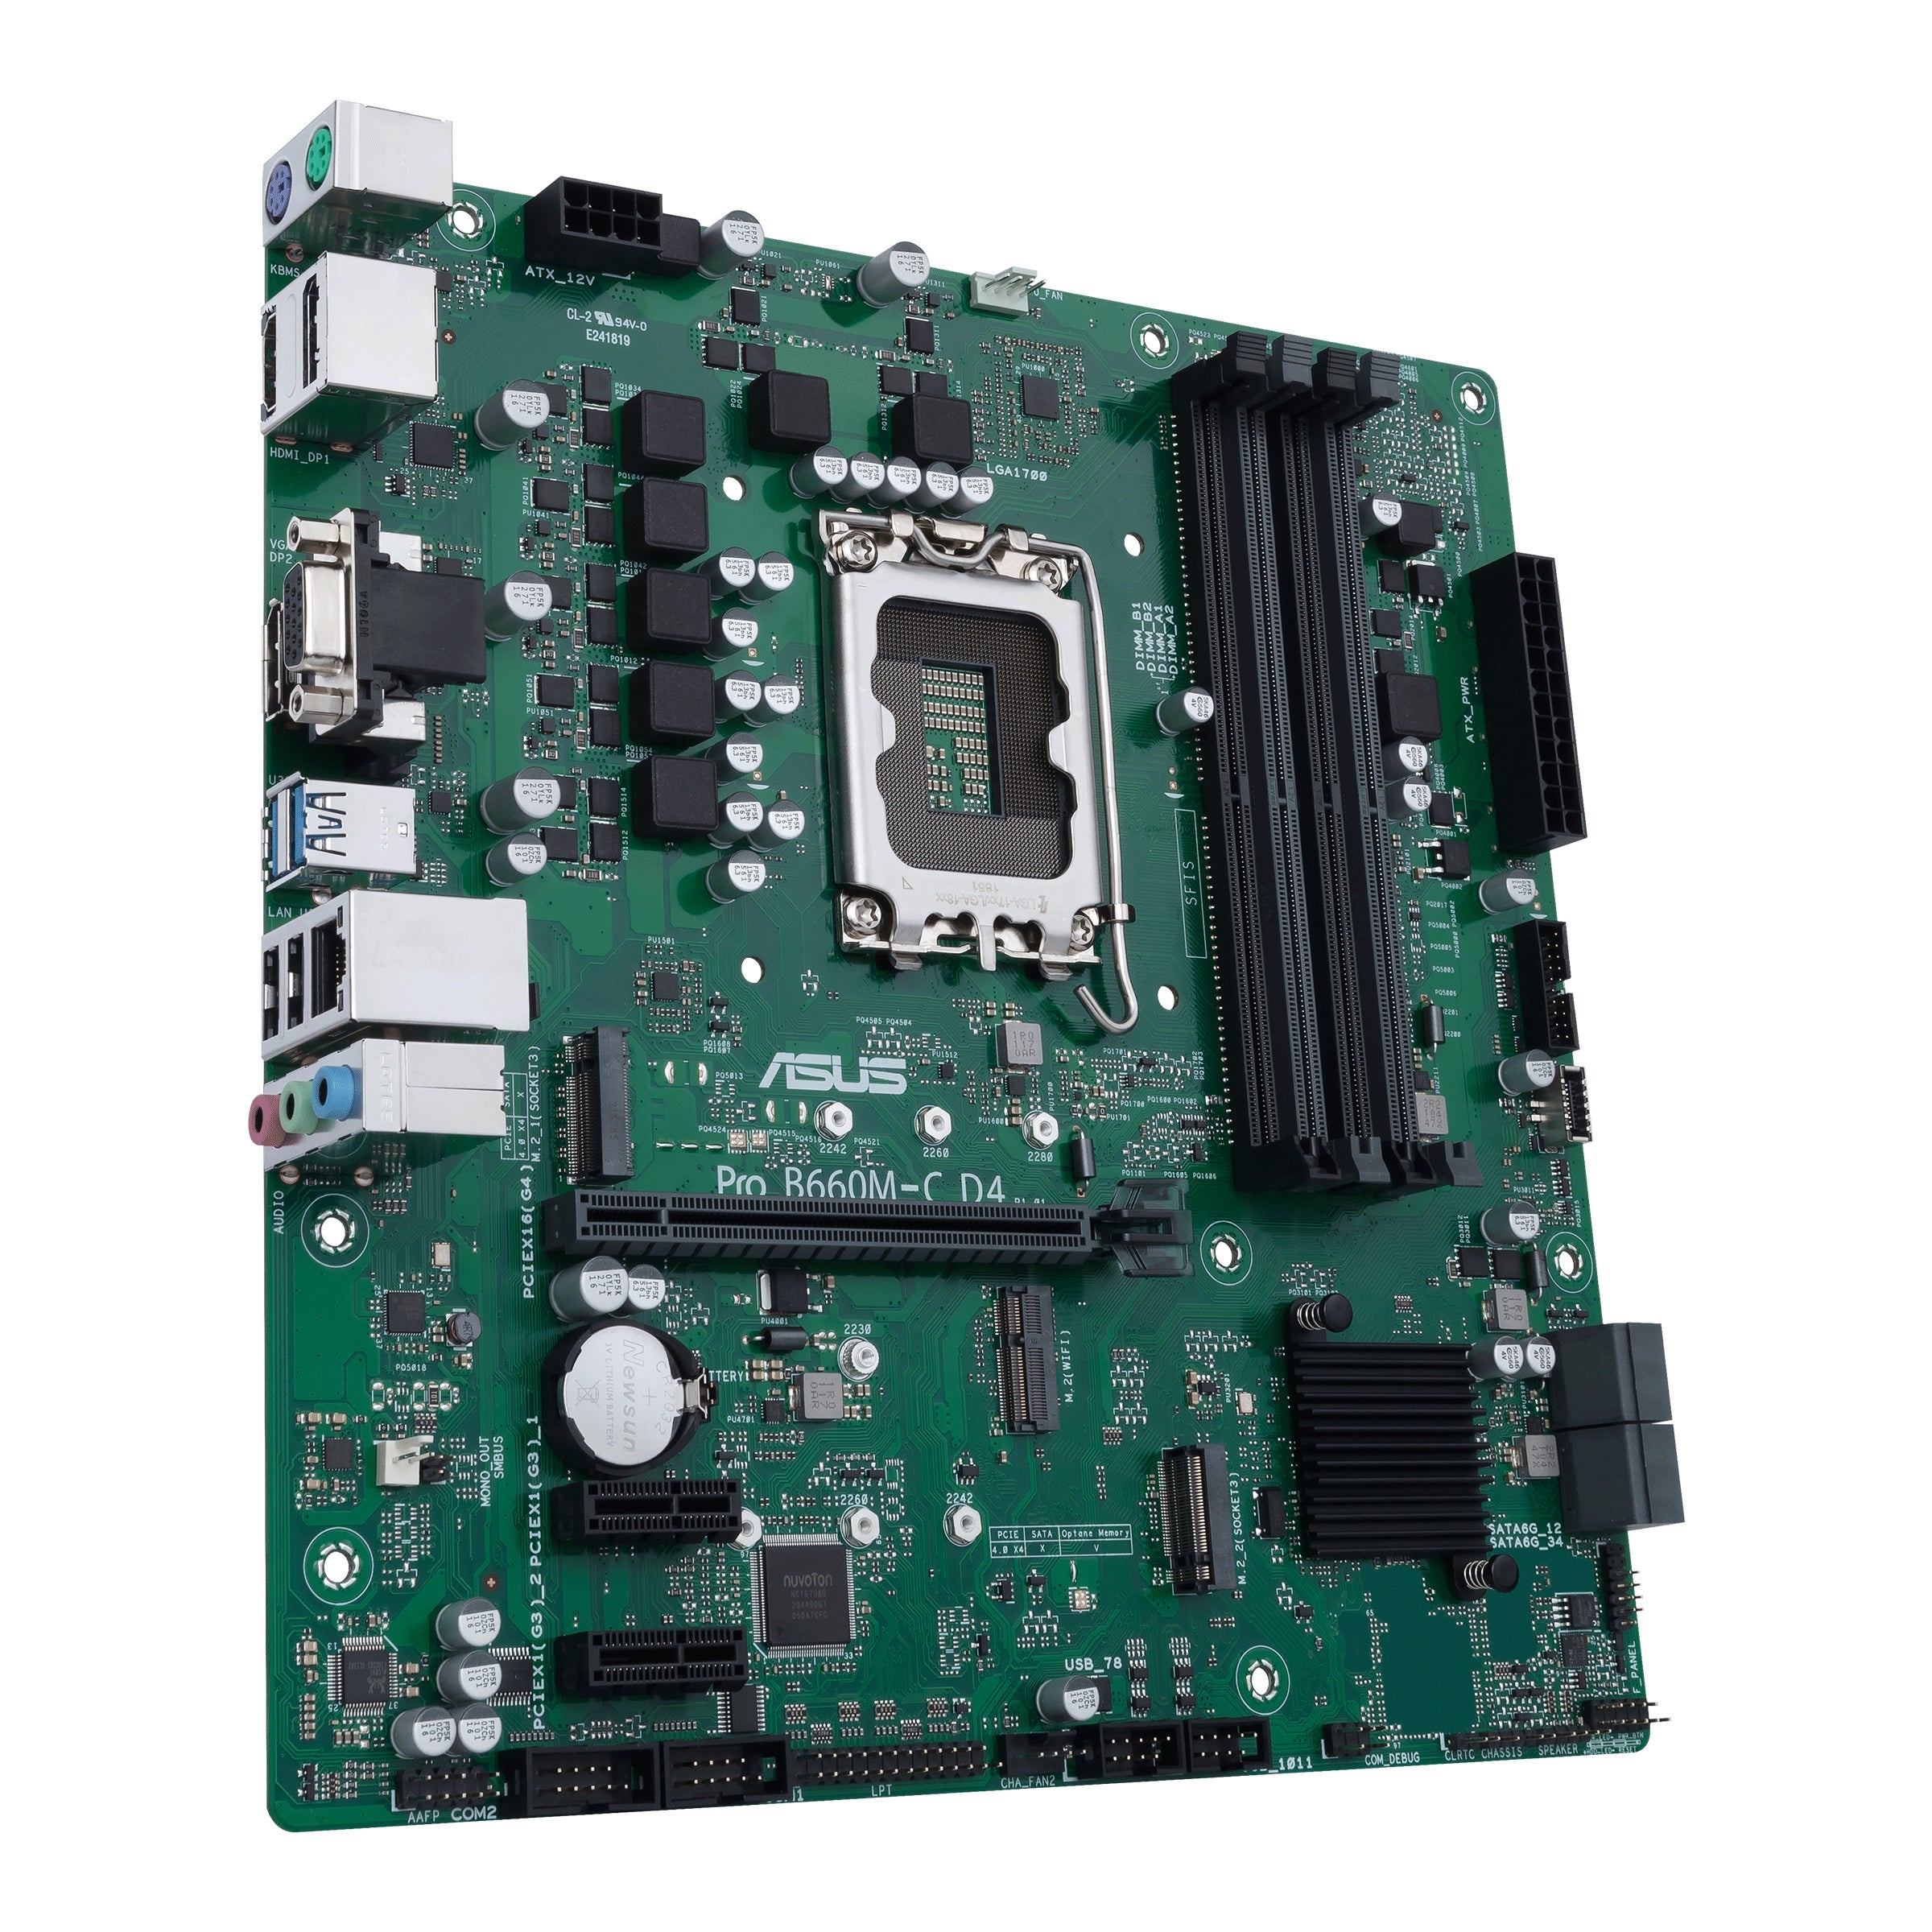 ASUS PRO B660M-C D4-CSM (mATX, B660, LGA 1700, DDR4)